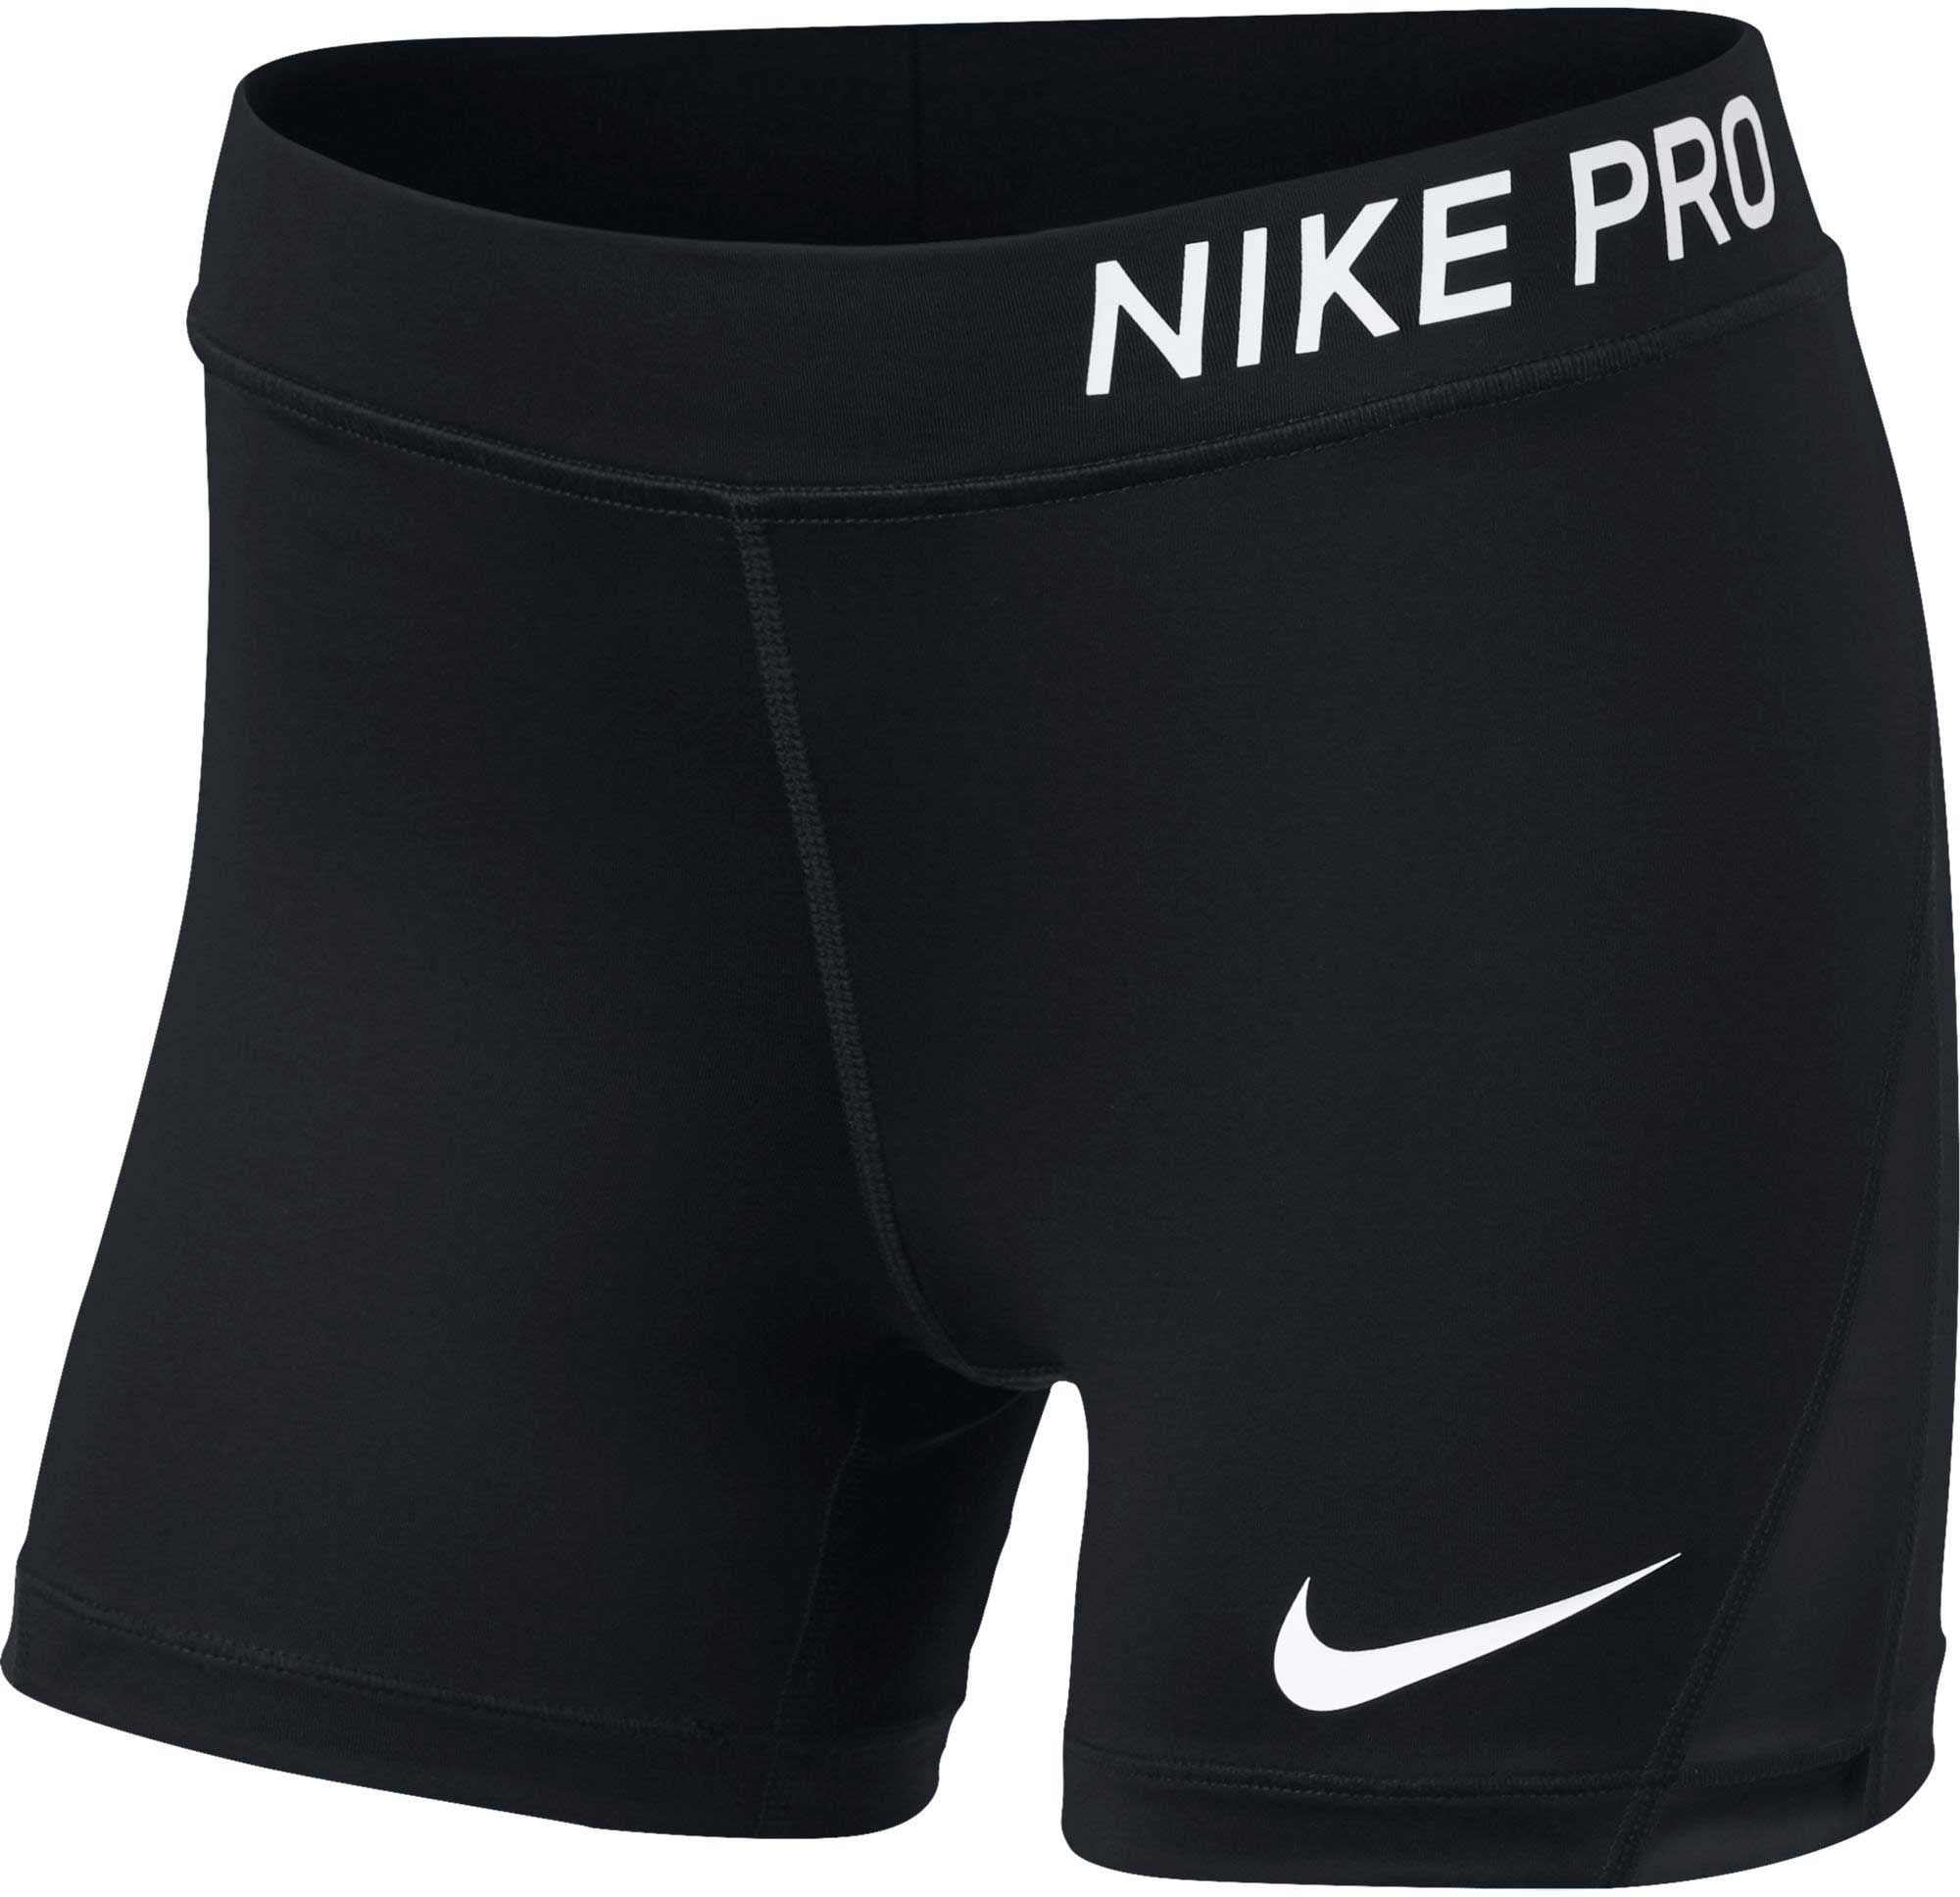 Nike - Nike Pro Girls' 4'' Shorts Black/Black XL - Walmart.com ...